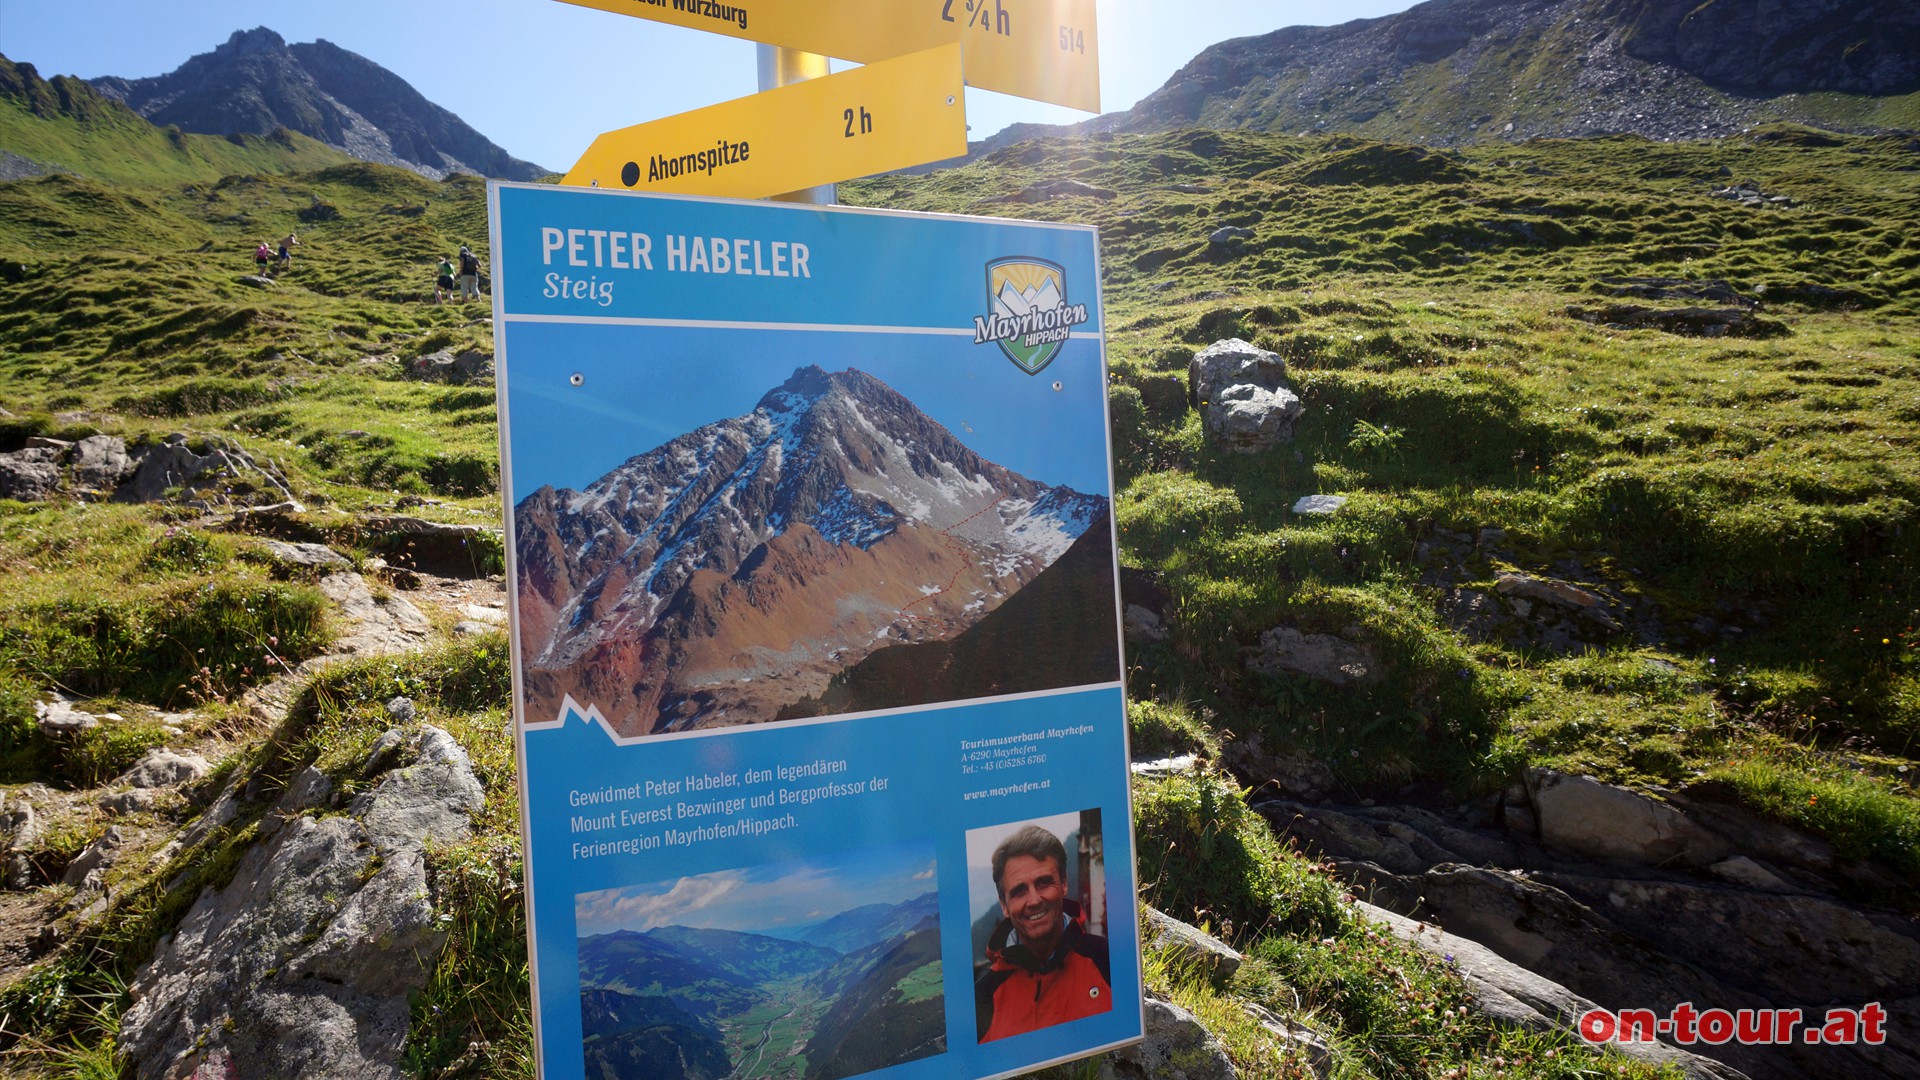 Der weitere Aufstiegssteig ist dem berhmten Zillertaler Mount Everest Besteiger Peter Habeler gewidmet.